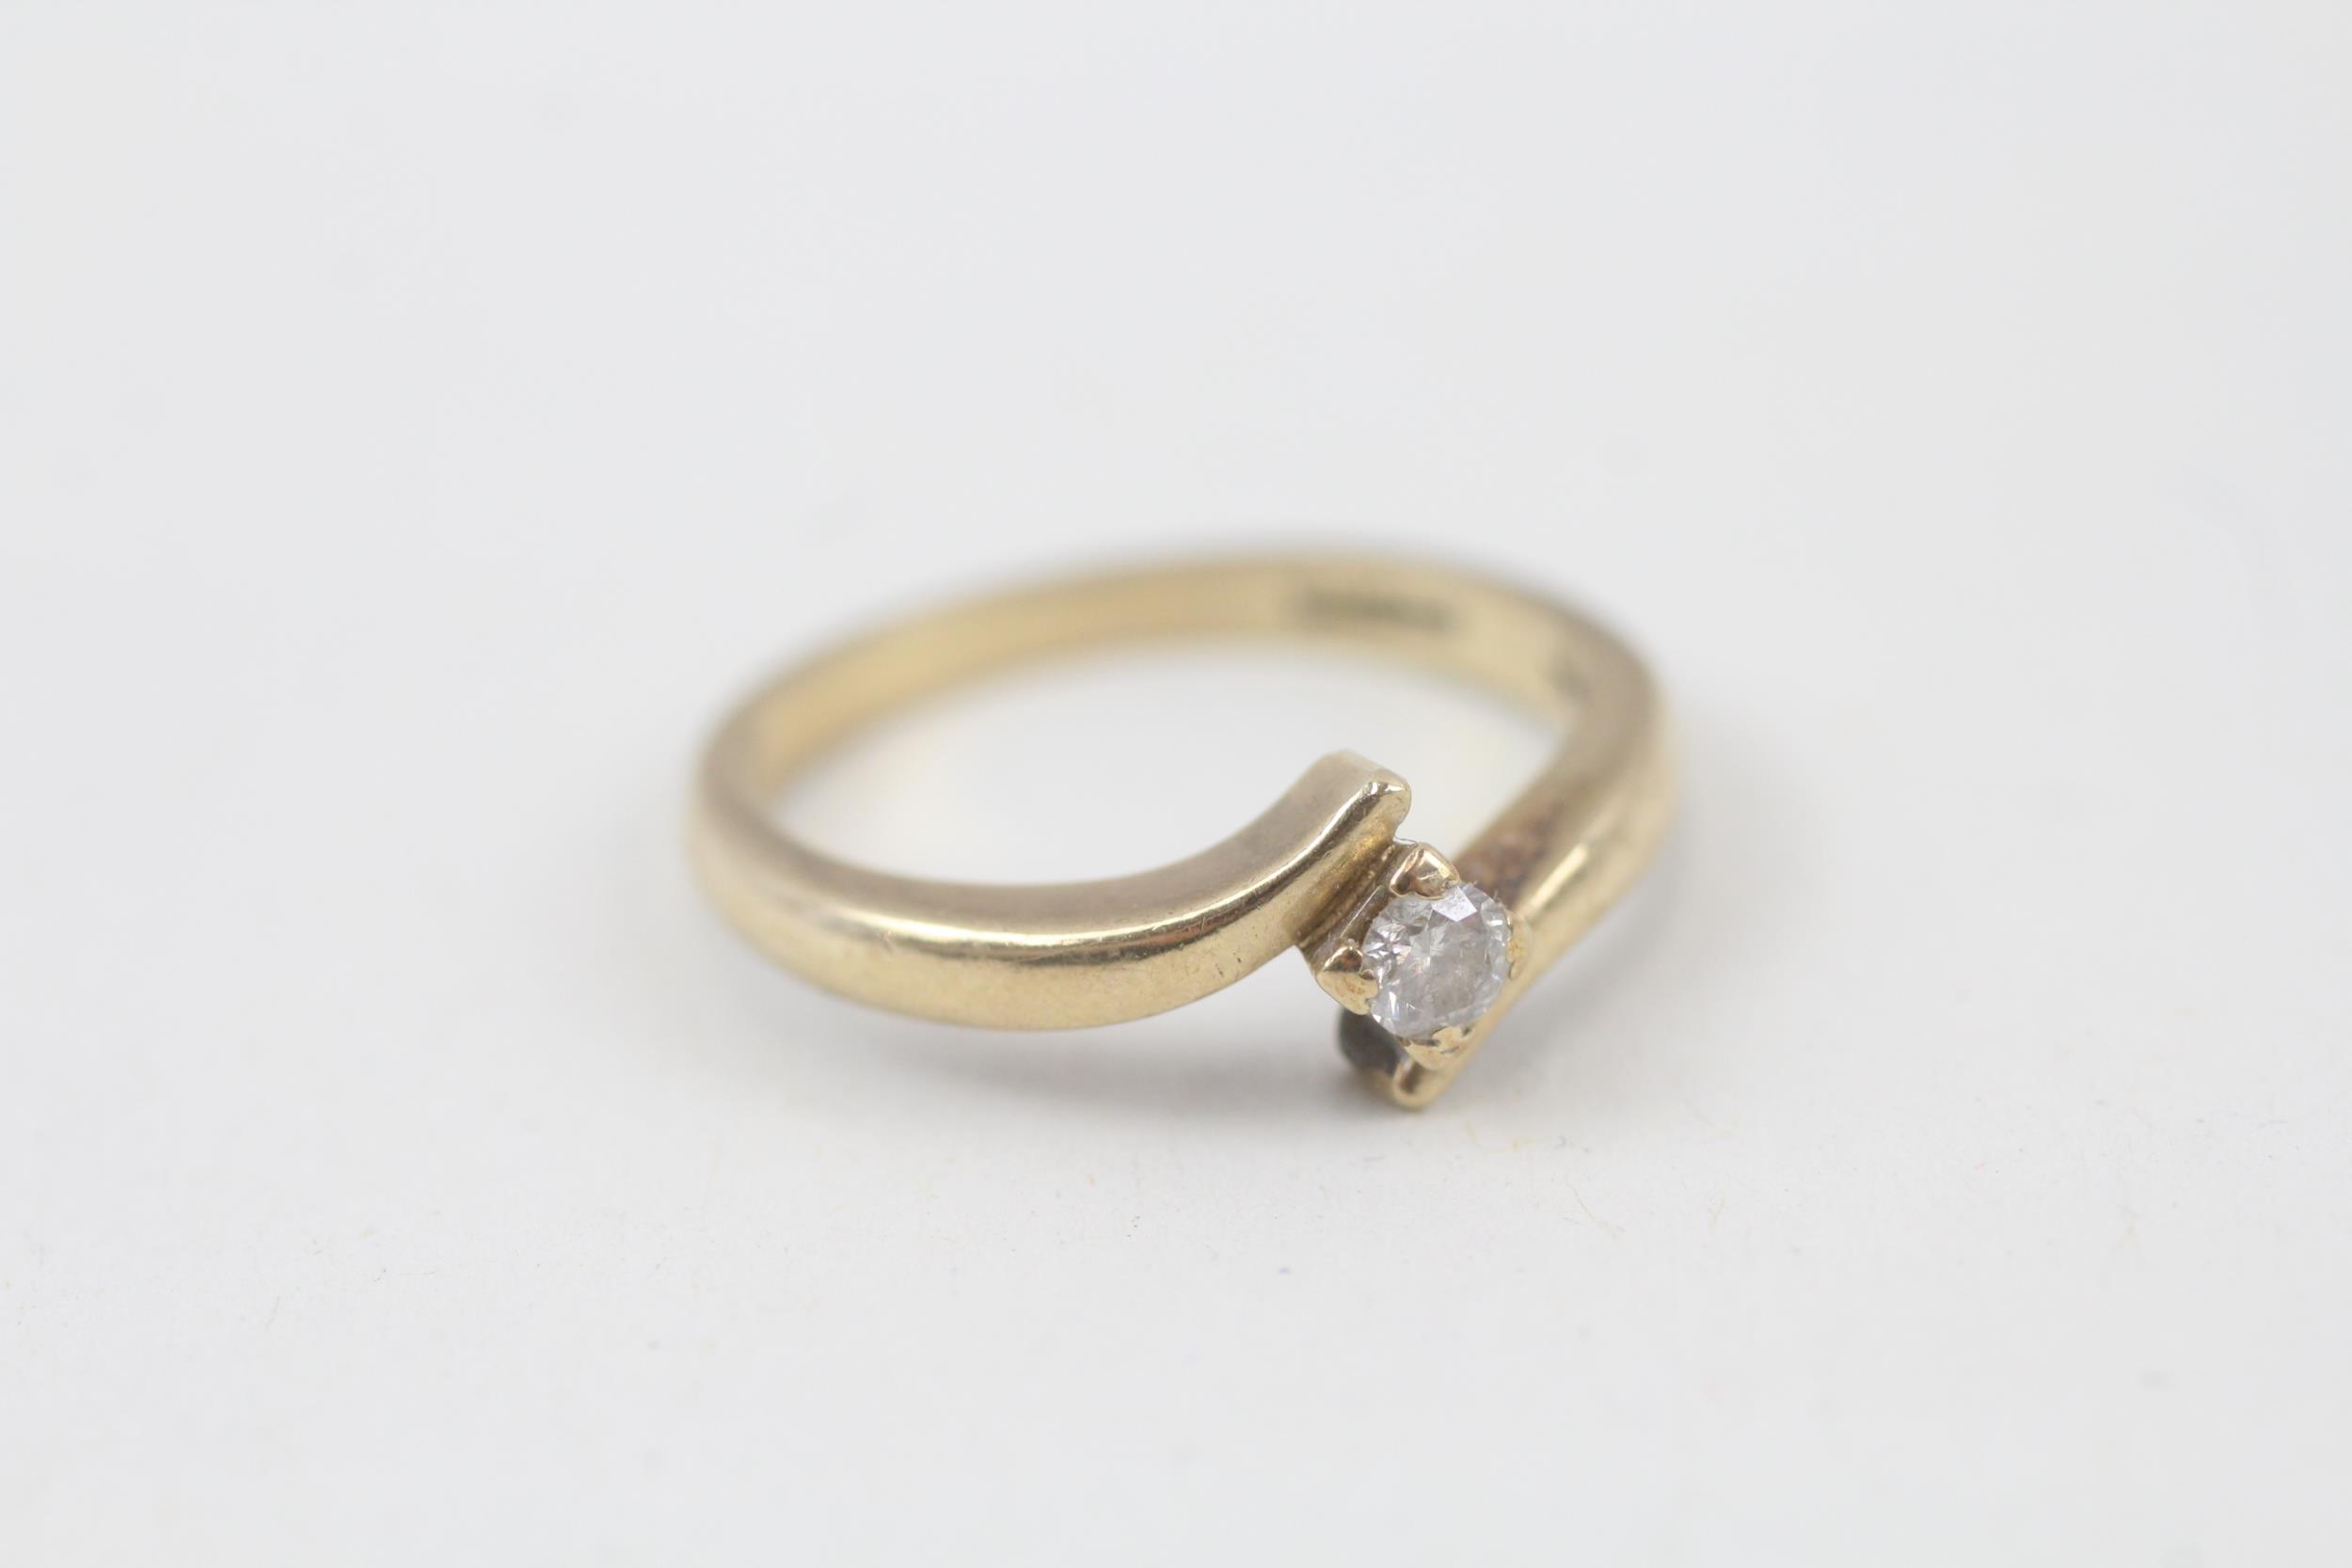 9ct gold circular cut diamond single stone ring Size M - 2.6 g - Image 2 of 7